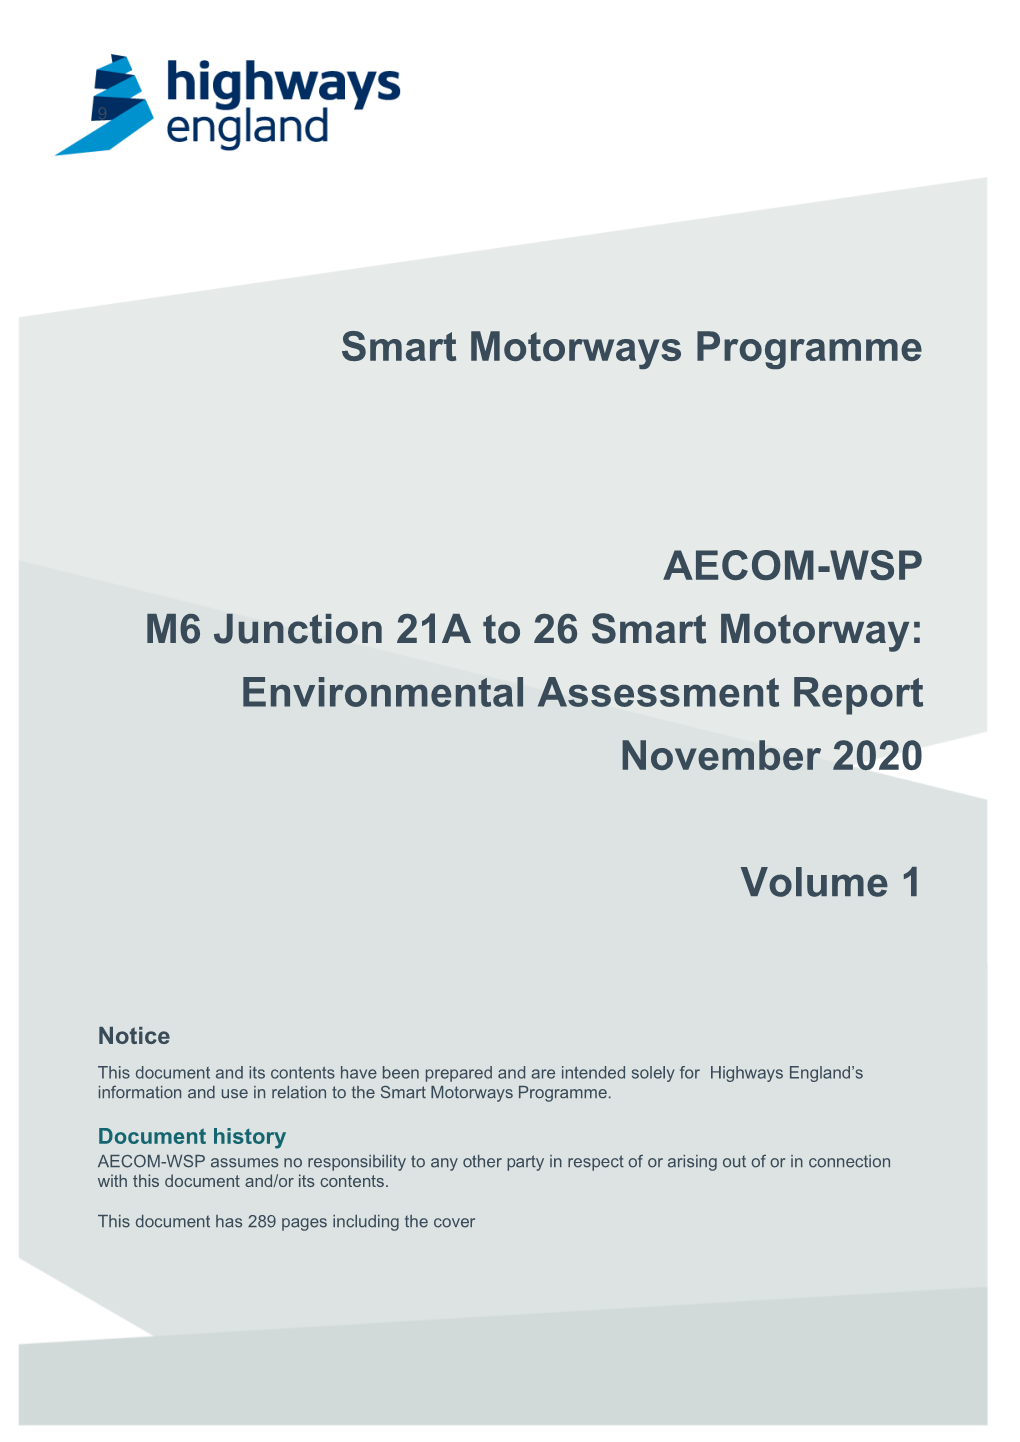 M6 Junction 21A to 26 Smart Motorway: Environmental Assessment Report November 2020